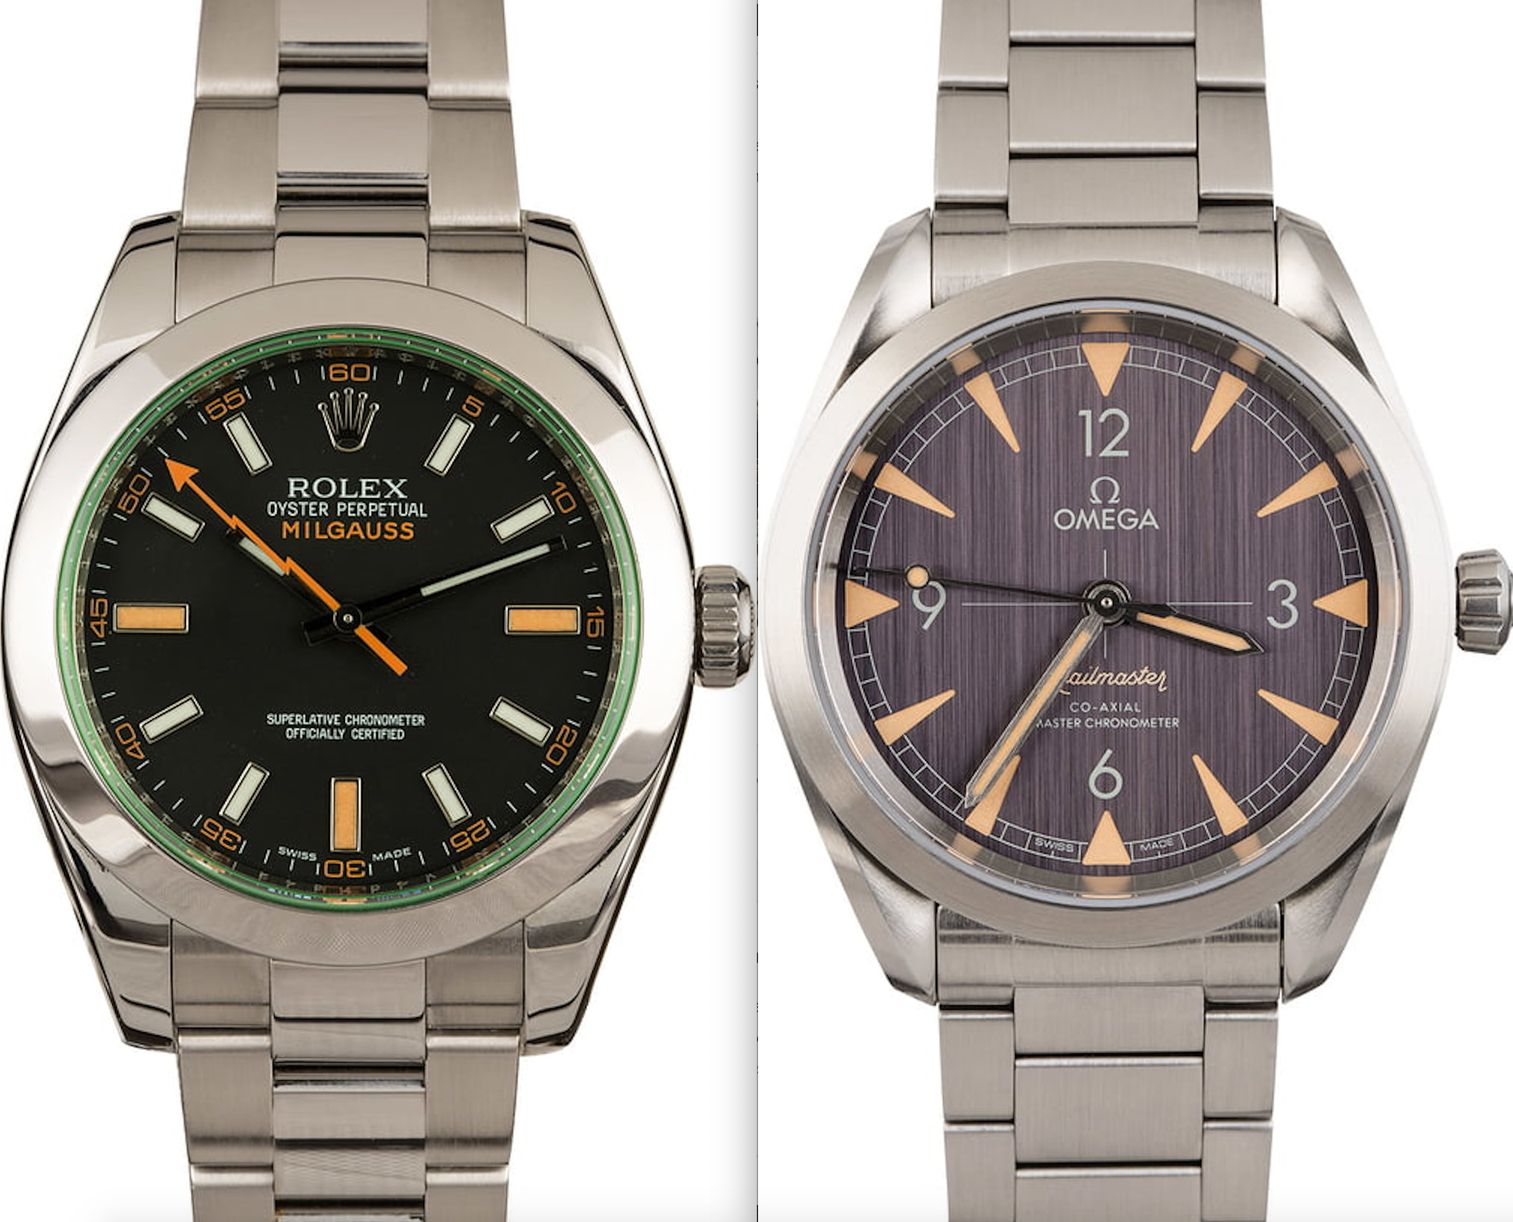 Antimagnetic Watches: Rolex Milgauss vs Omega Railmaster